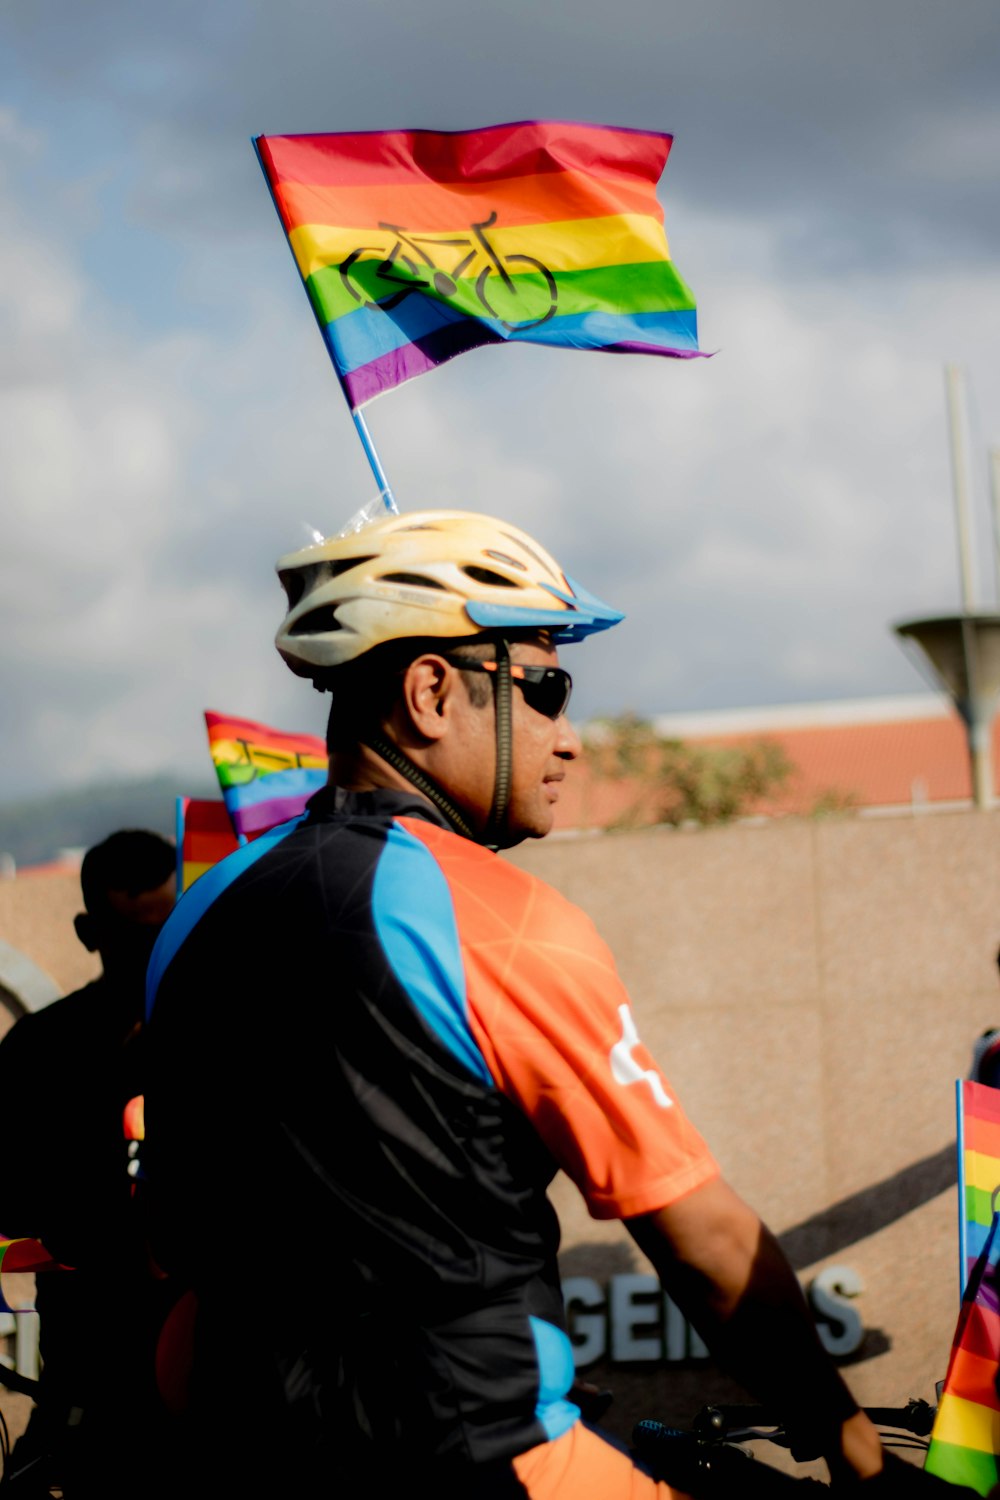 un uomo in sella a una bicicletta con in mano una bandiera arcobaleno